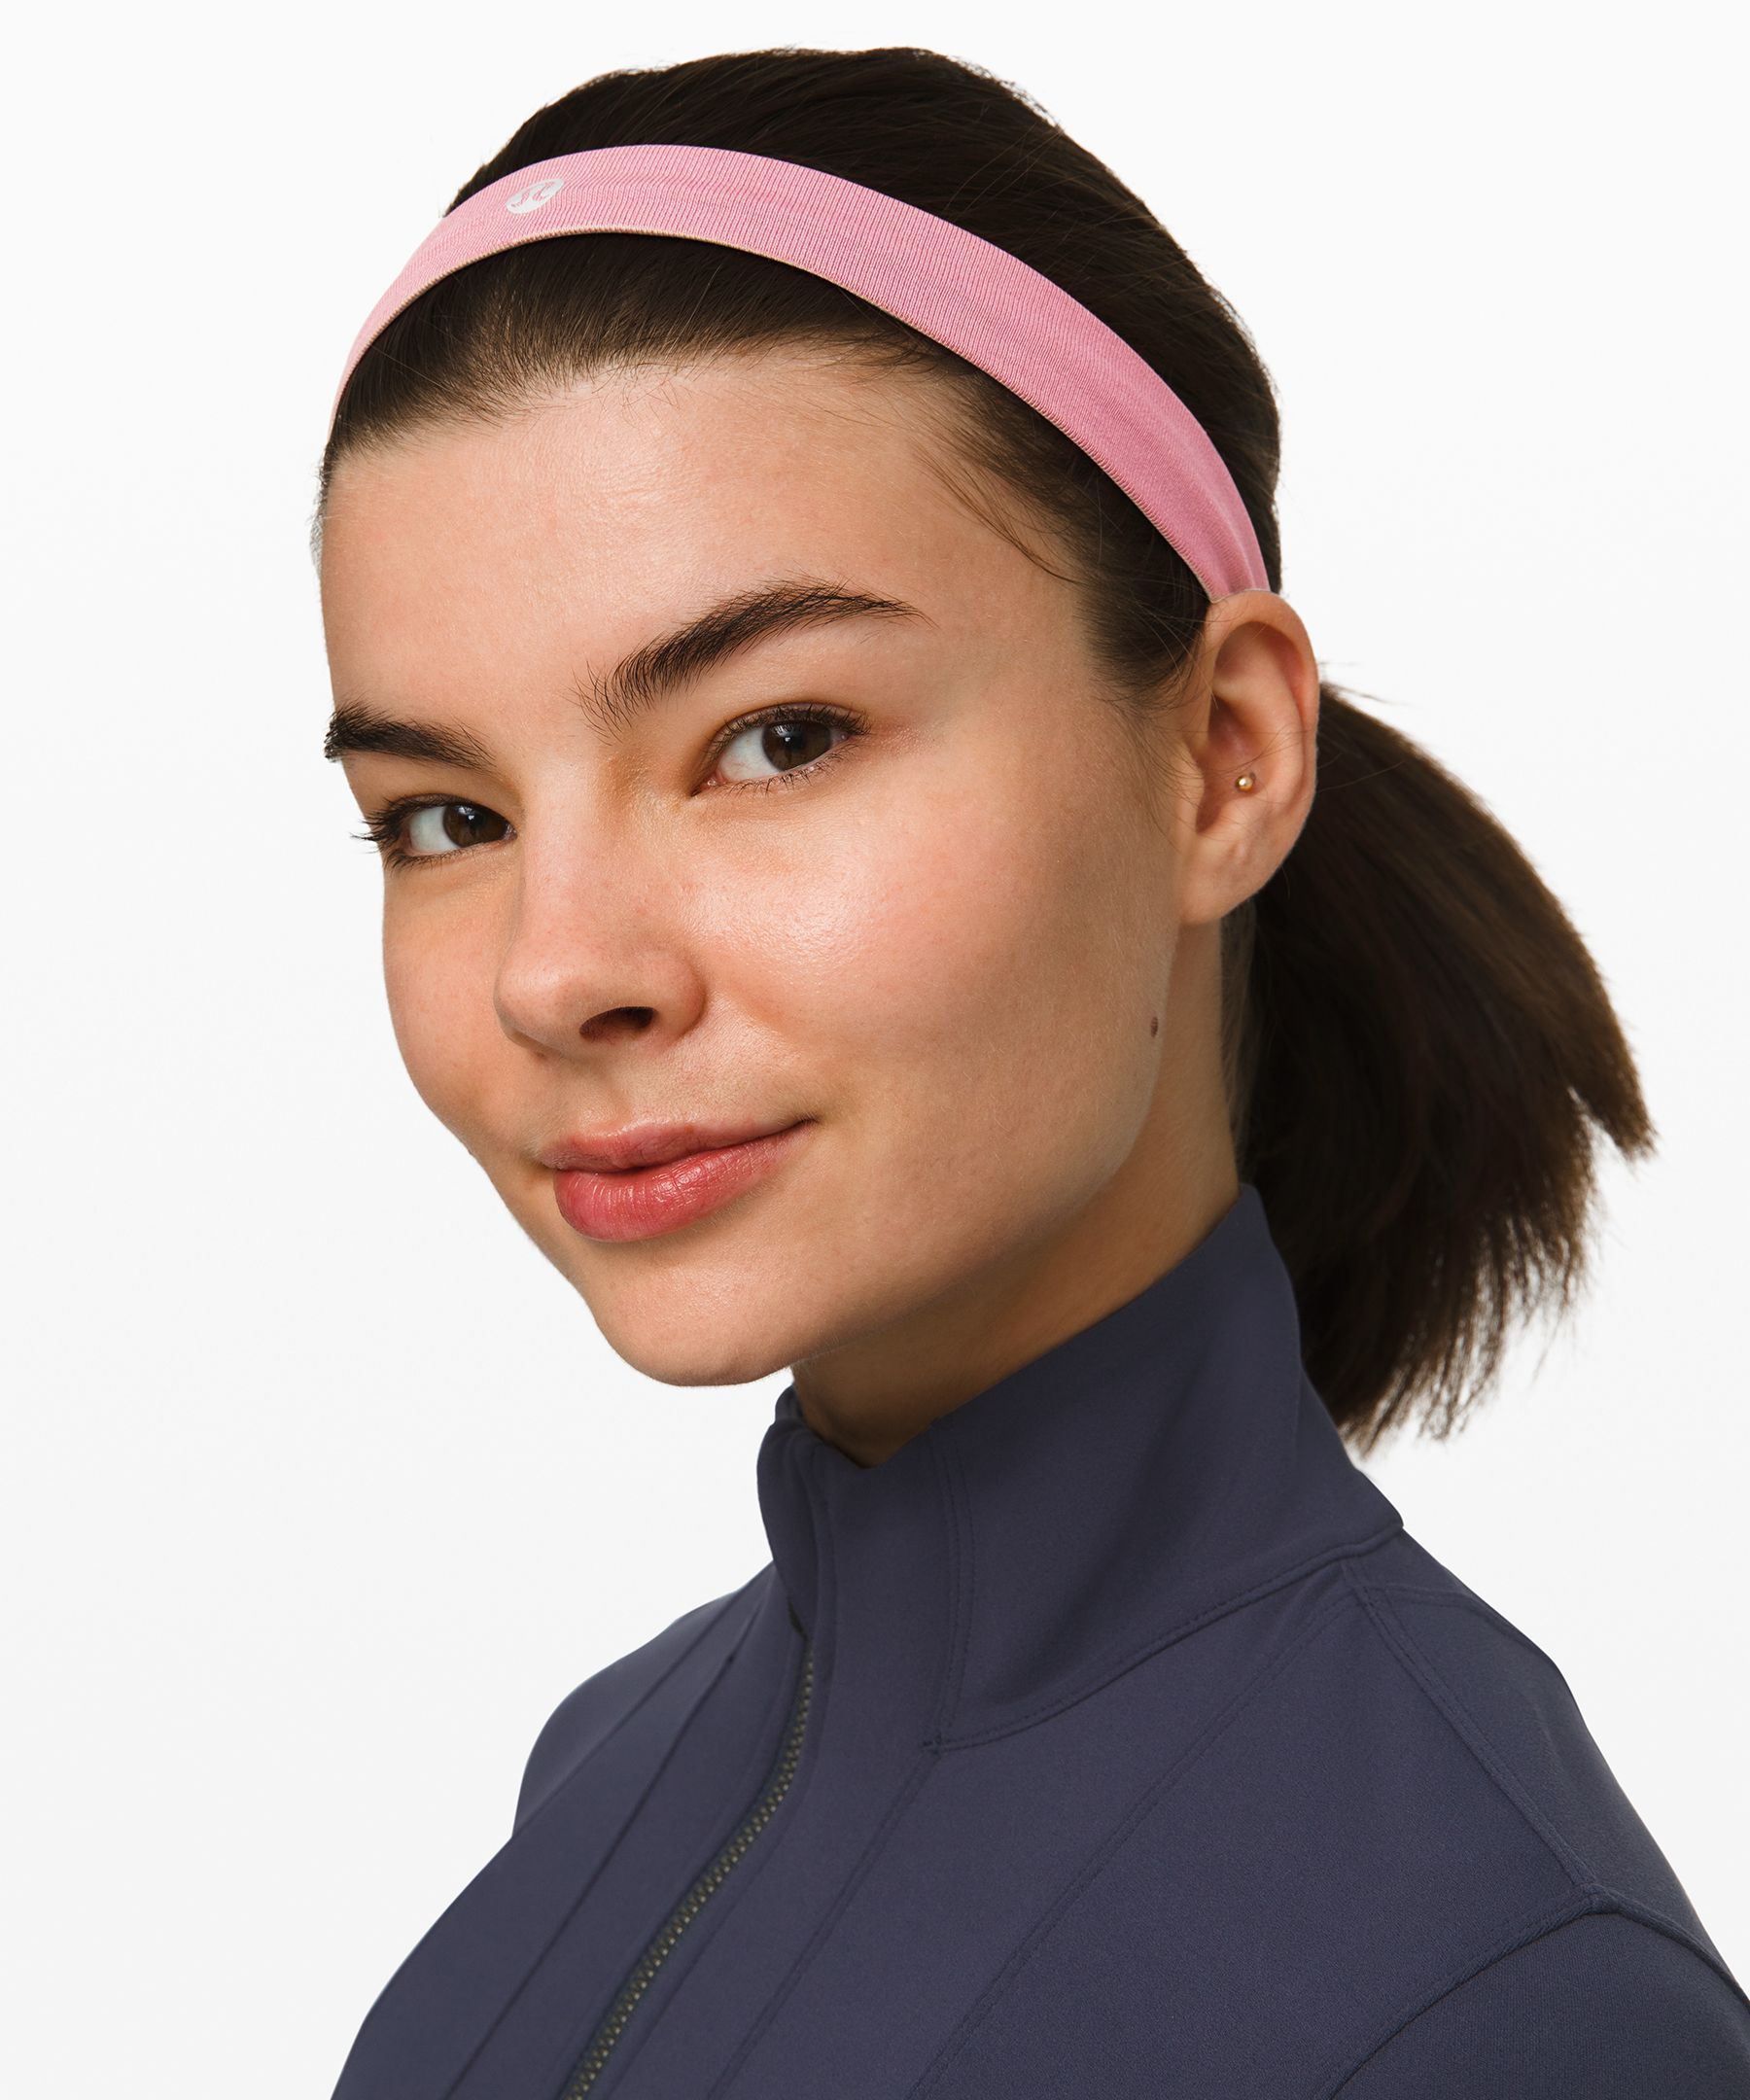 Lululemon Cardio Cross Trainer Headband In Pink Taupe/moss Rose